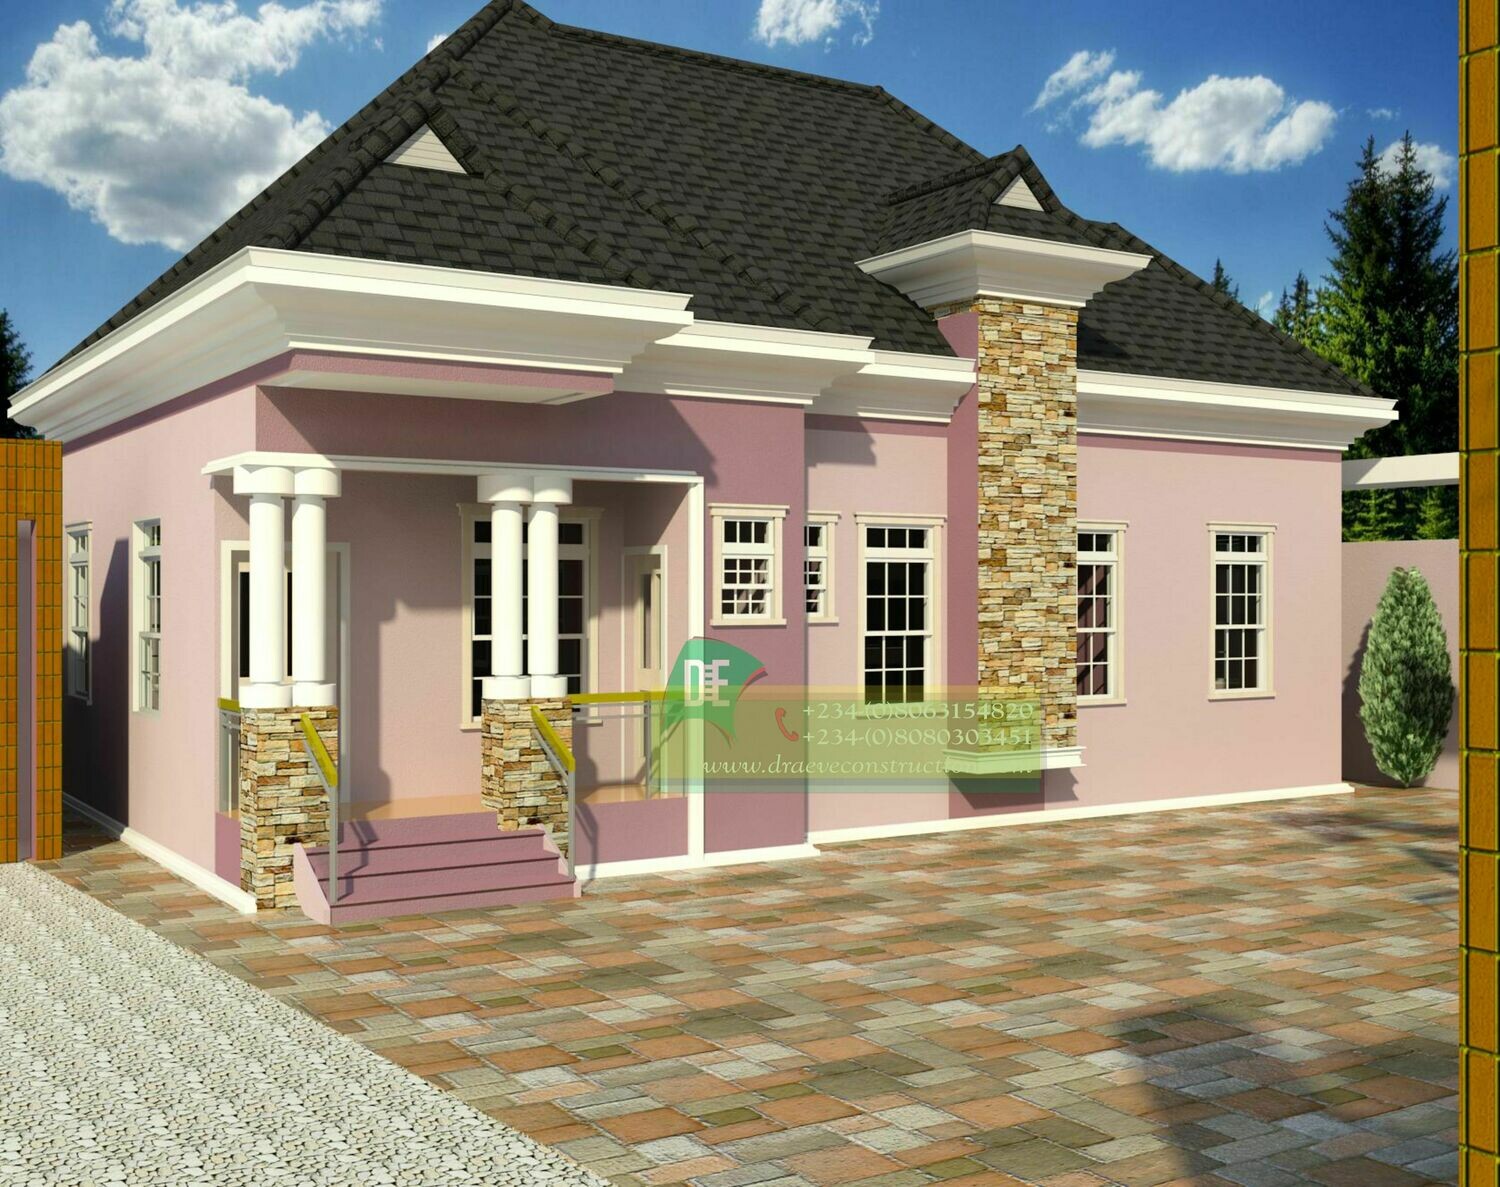 3 Bedroom Bungalow Floor Plan Preview | Nigerian House Plans